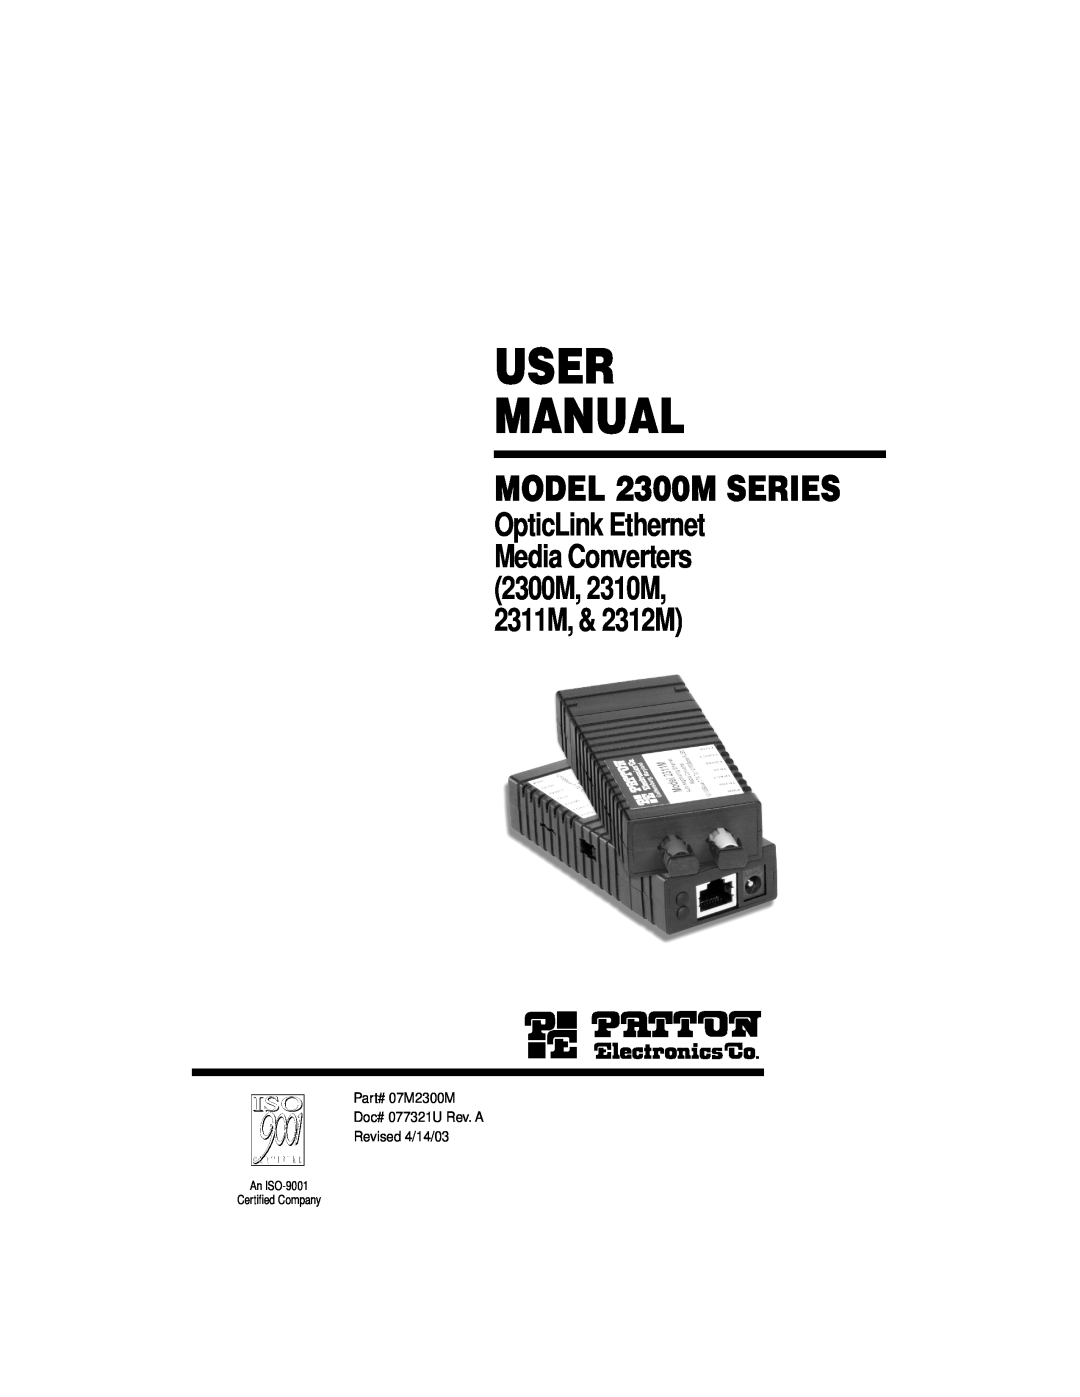 Patton electronic user manual User Manual, MODEL 2300M SERIES 